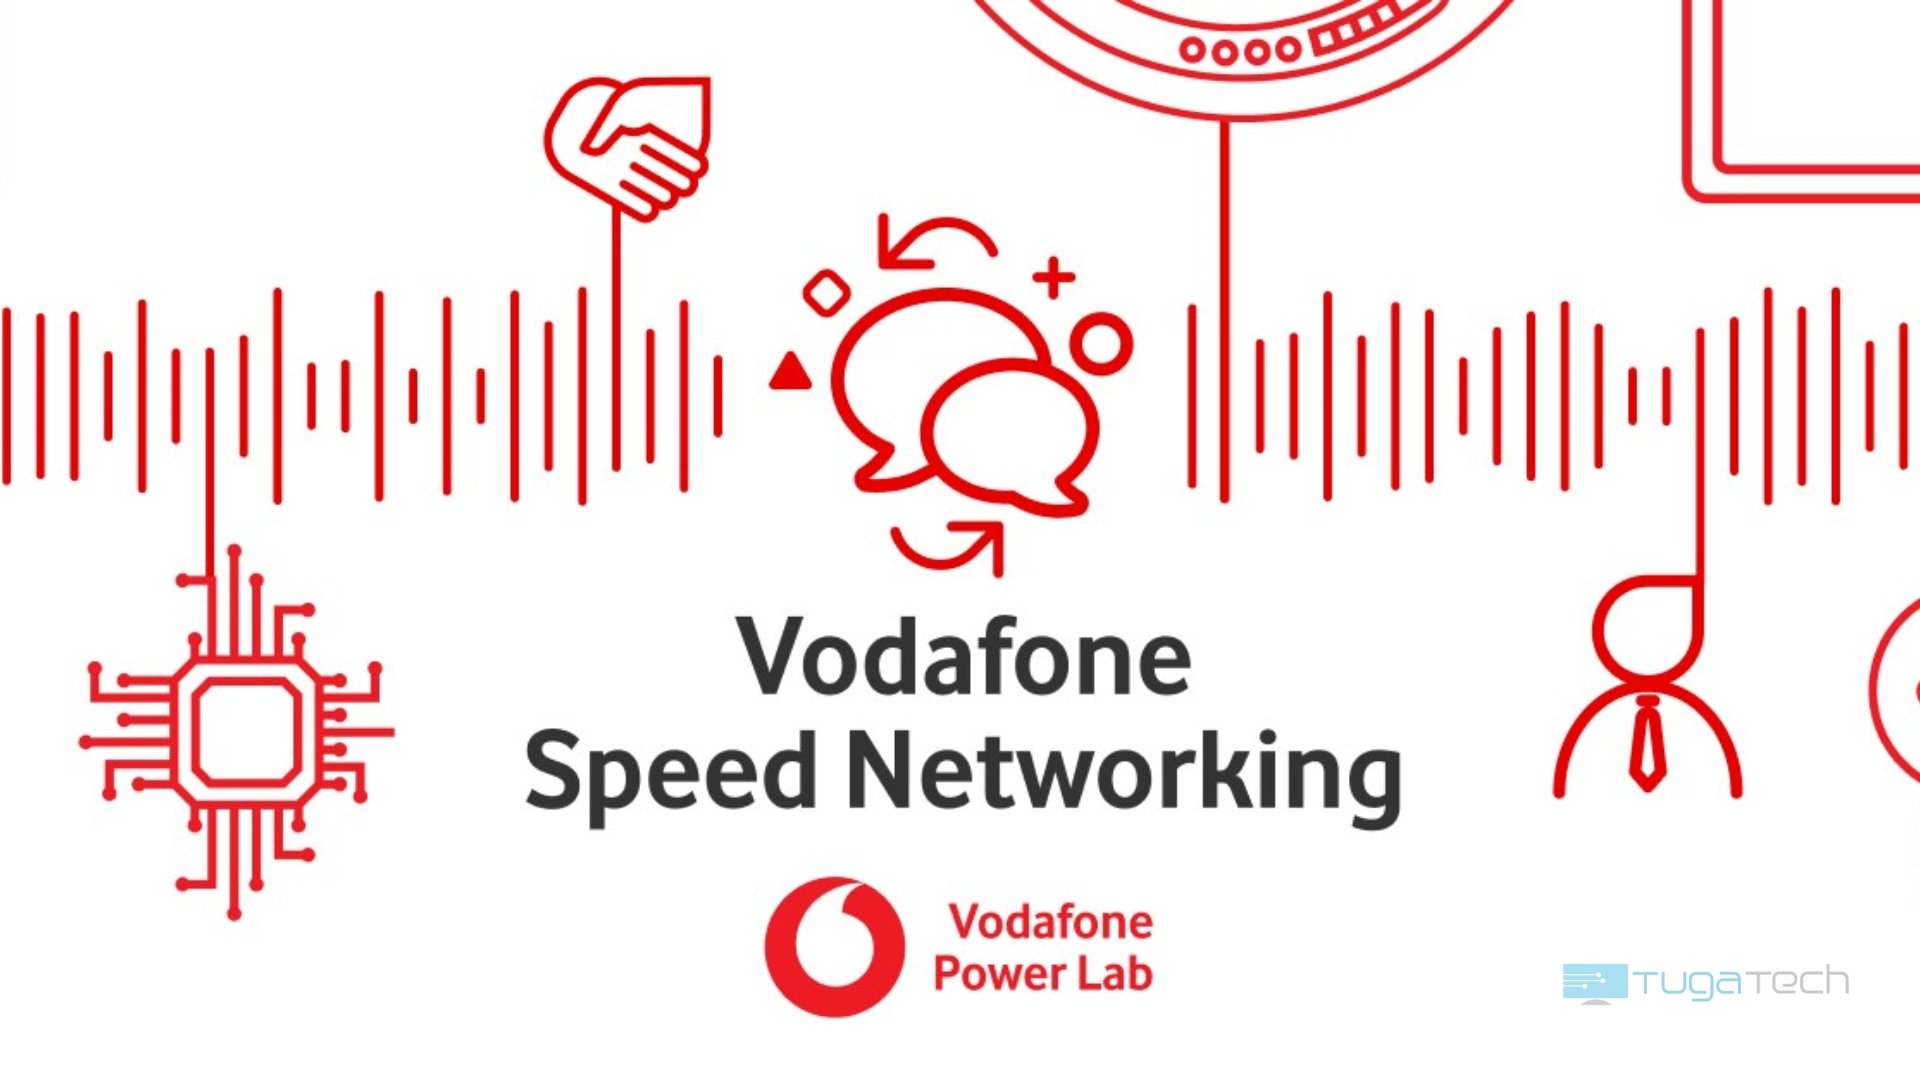 Vodafone Speed Networking